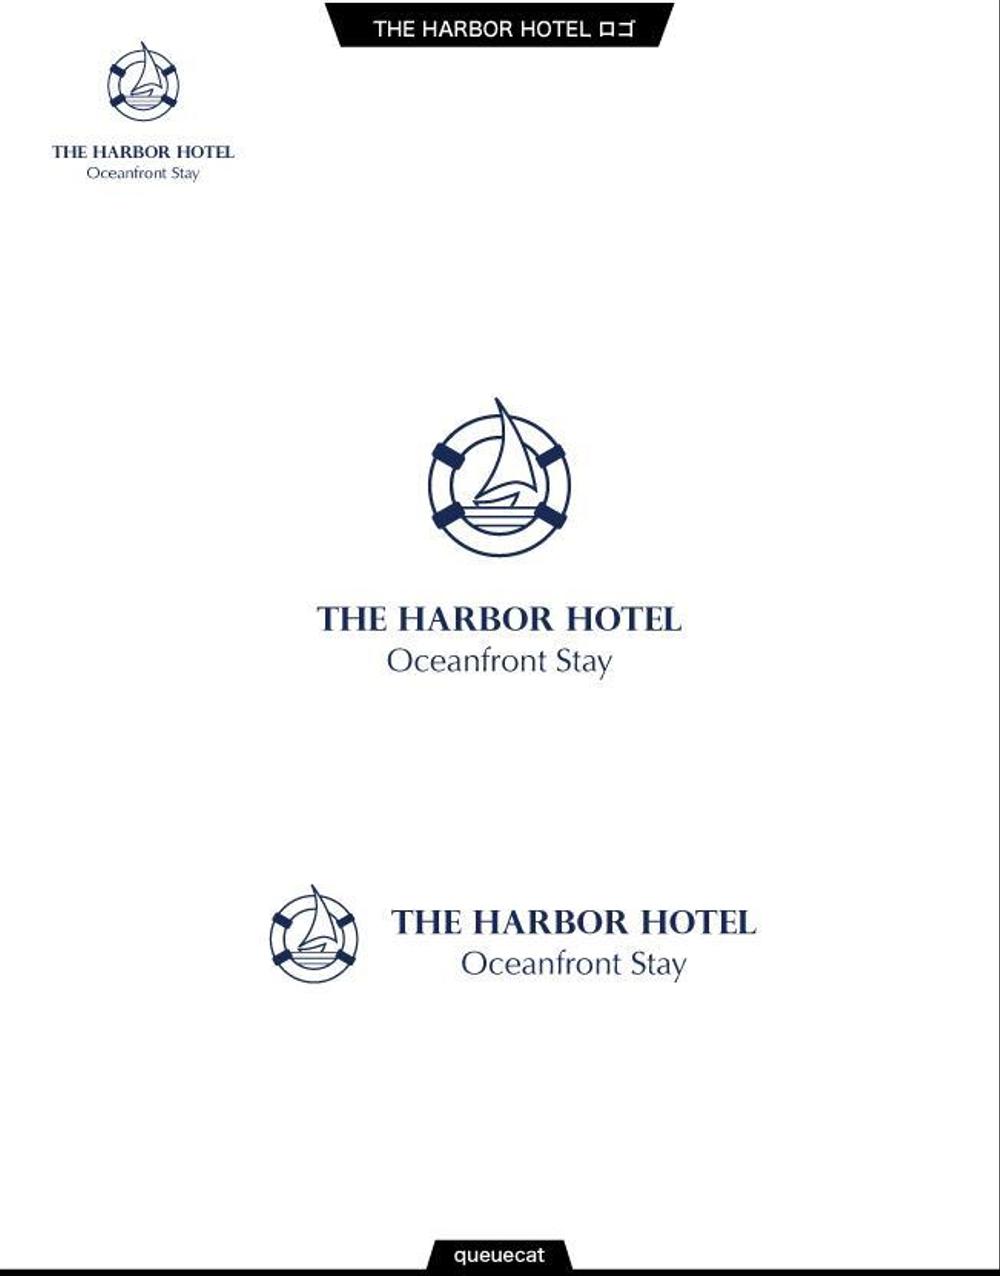 THE HARBOR HOTEL1_1.jpg